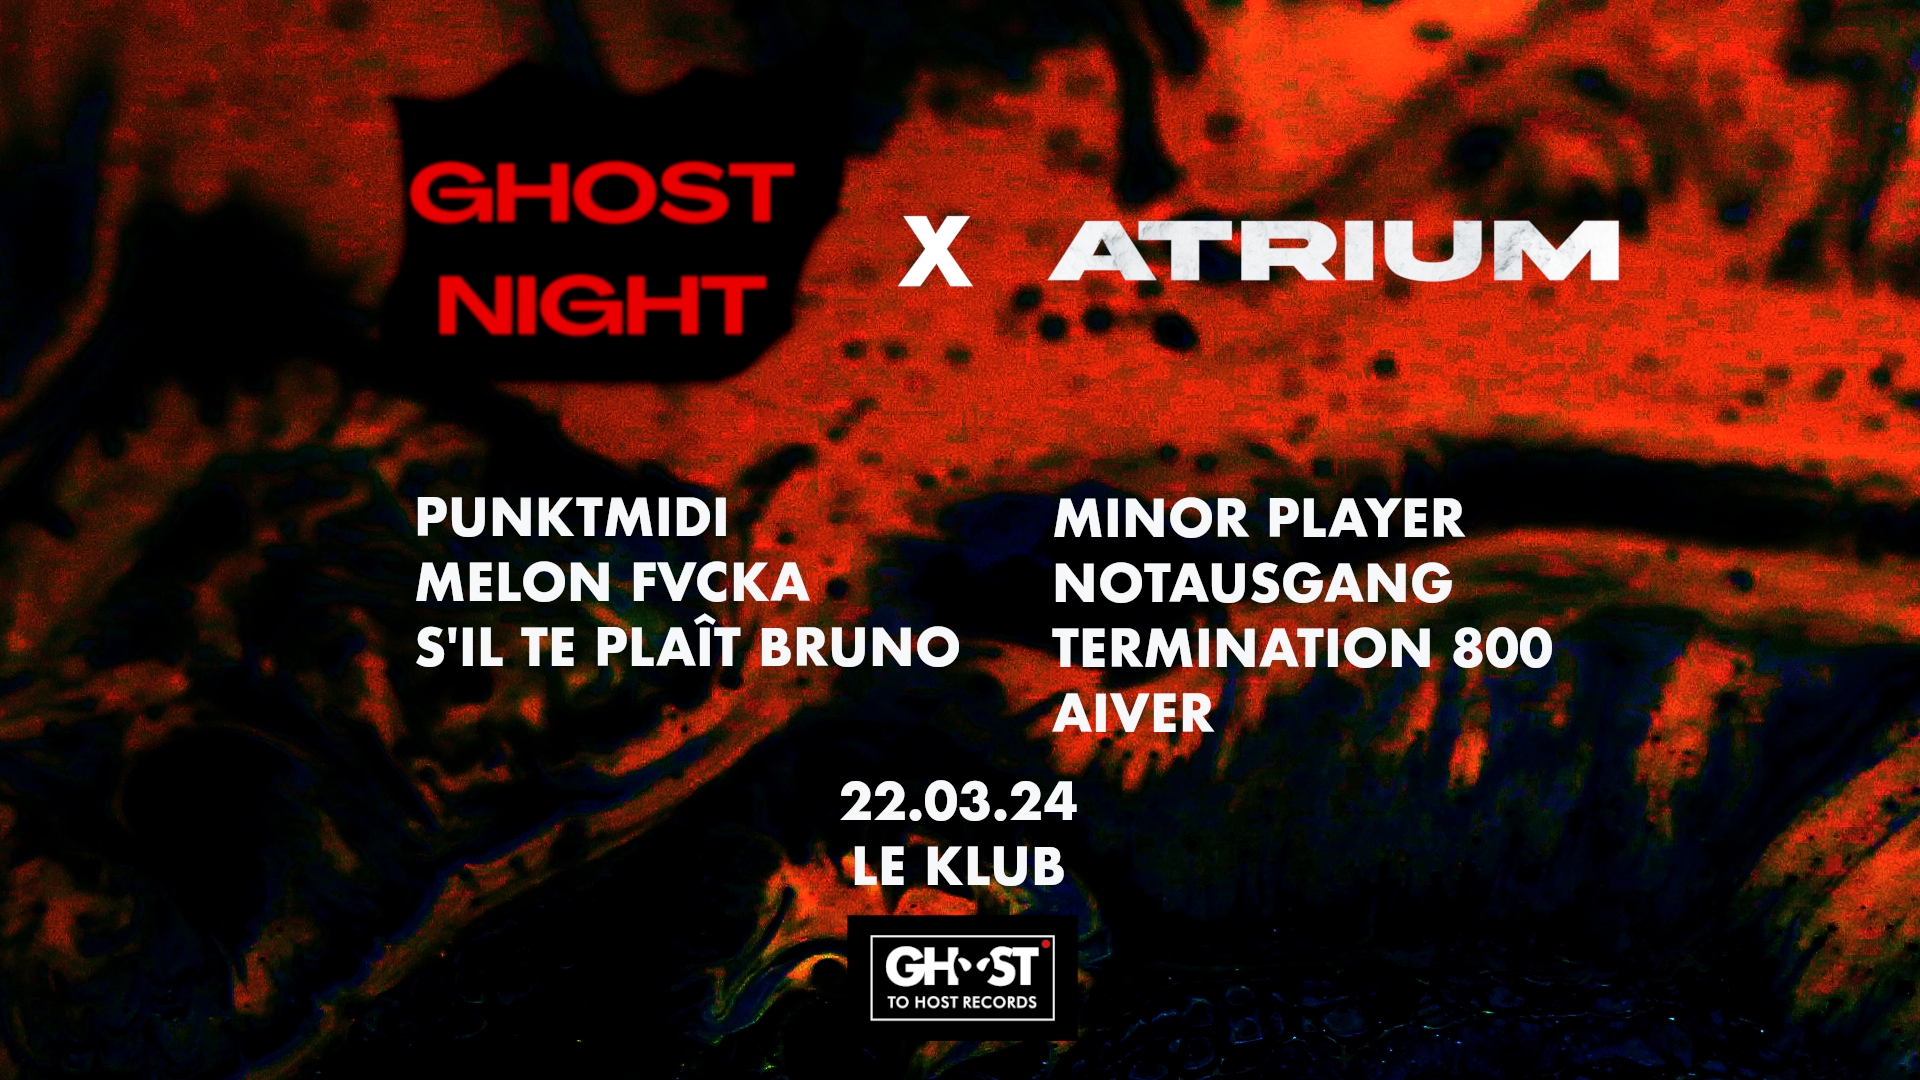 Ghost Night X Atrium - フライヤー表